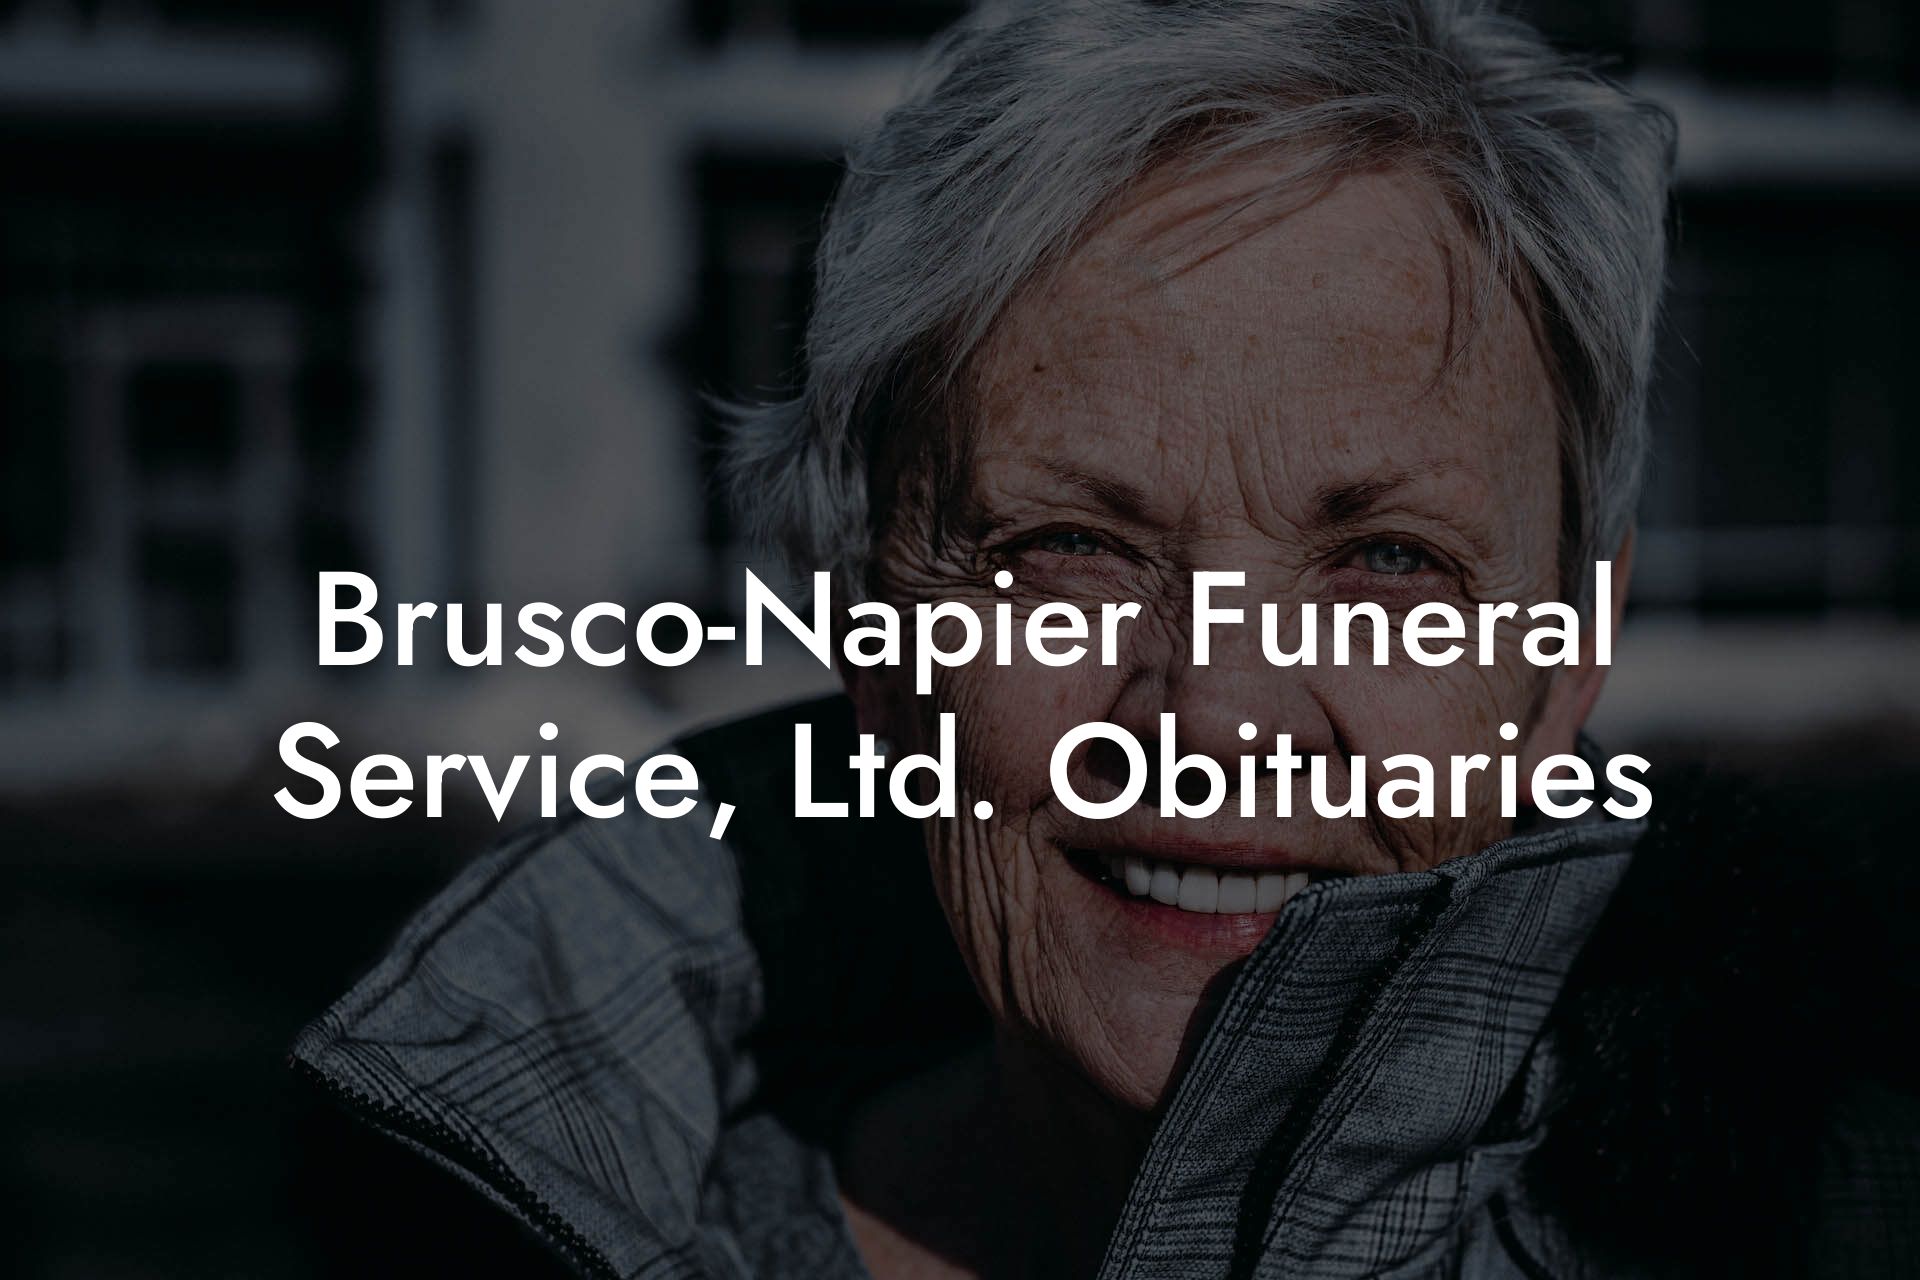 Brusco-Napier Funeral Service, Ltd. Obituaries